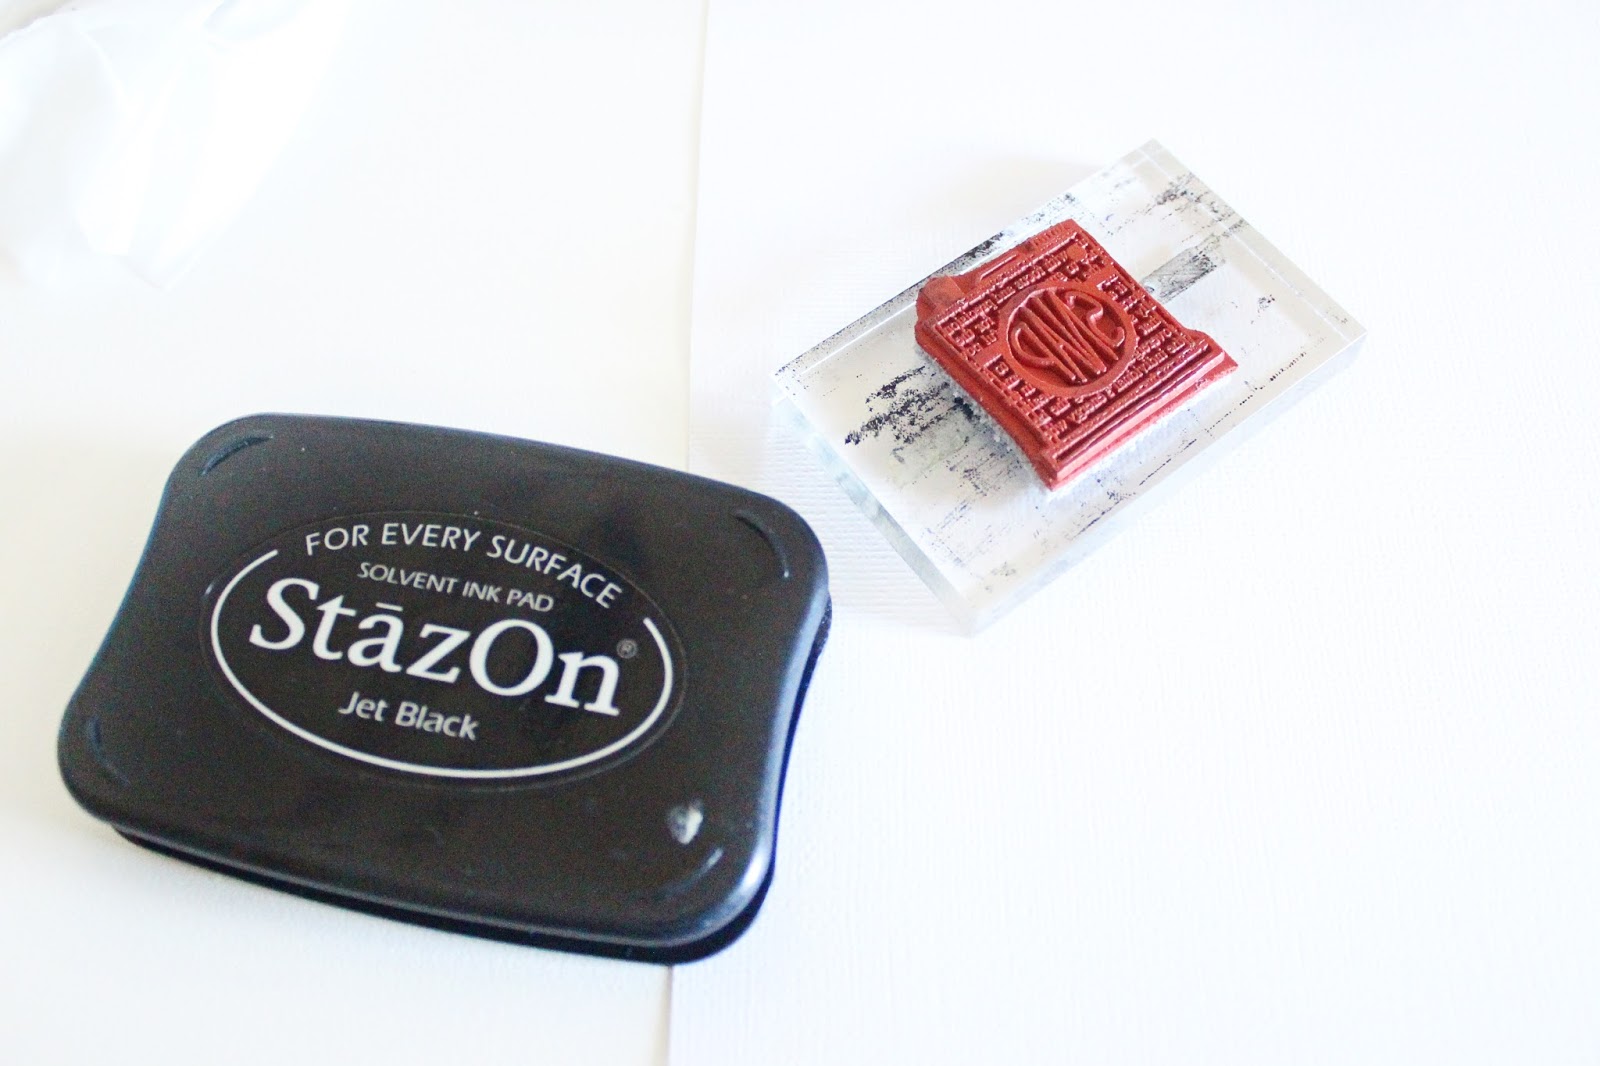 StazOn Jet Black Solvent Ink Pad